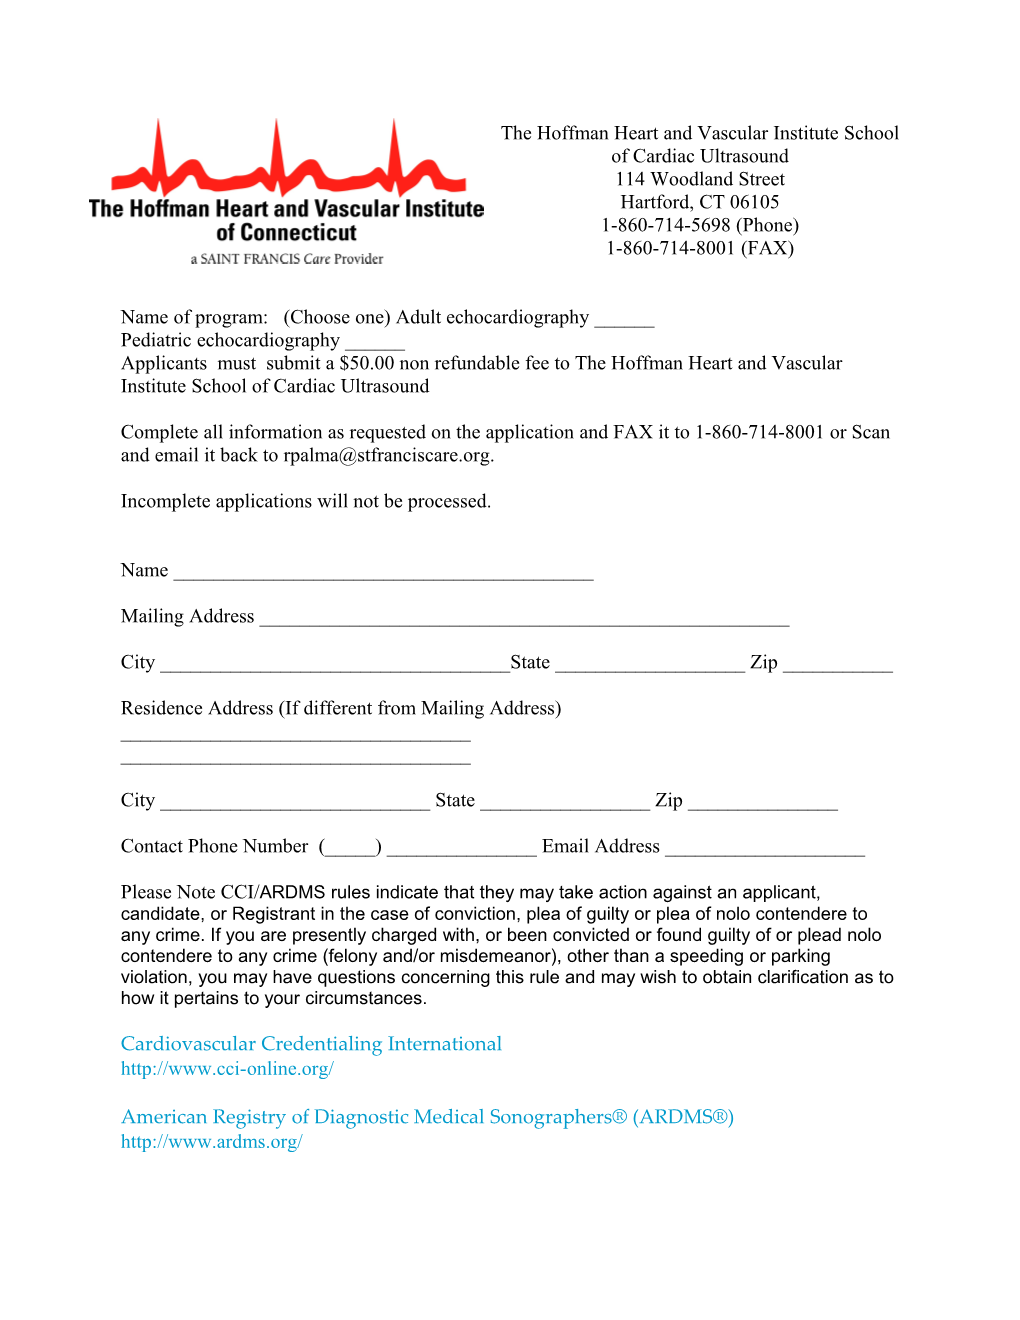 The Hoffman Heart and Vascular Institute School of Cardiac Ultrasound